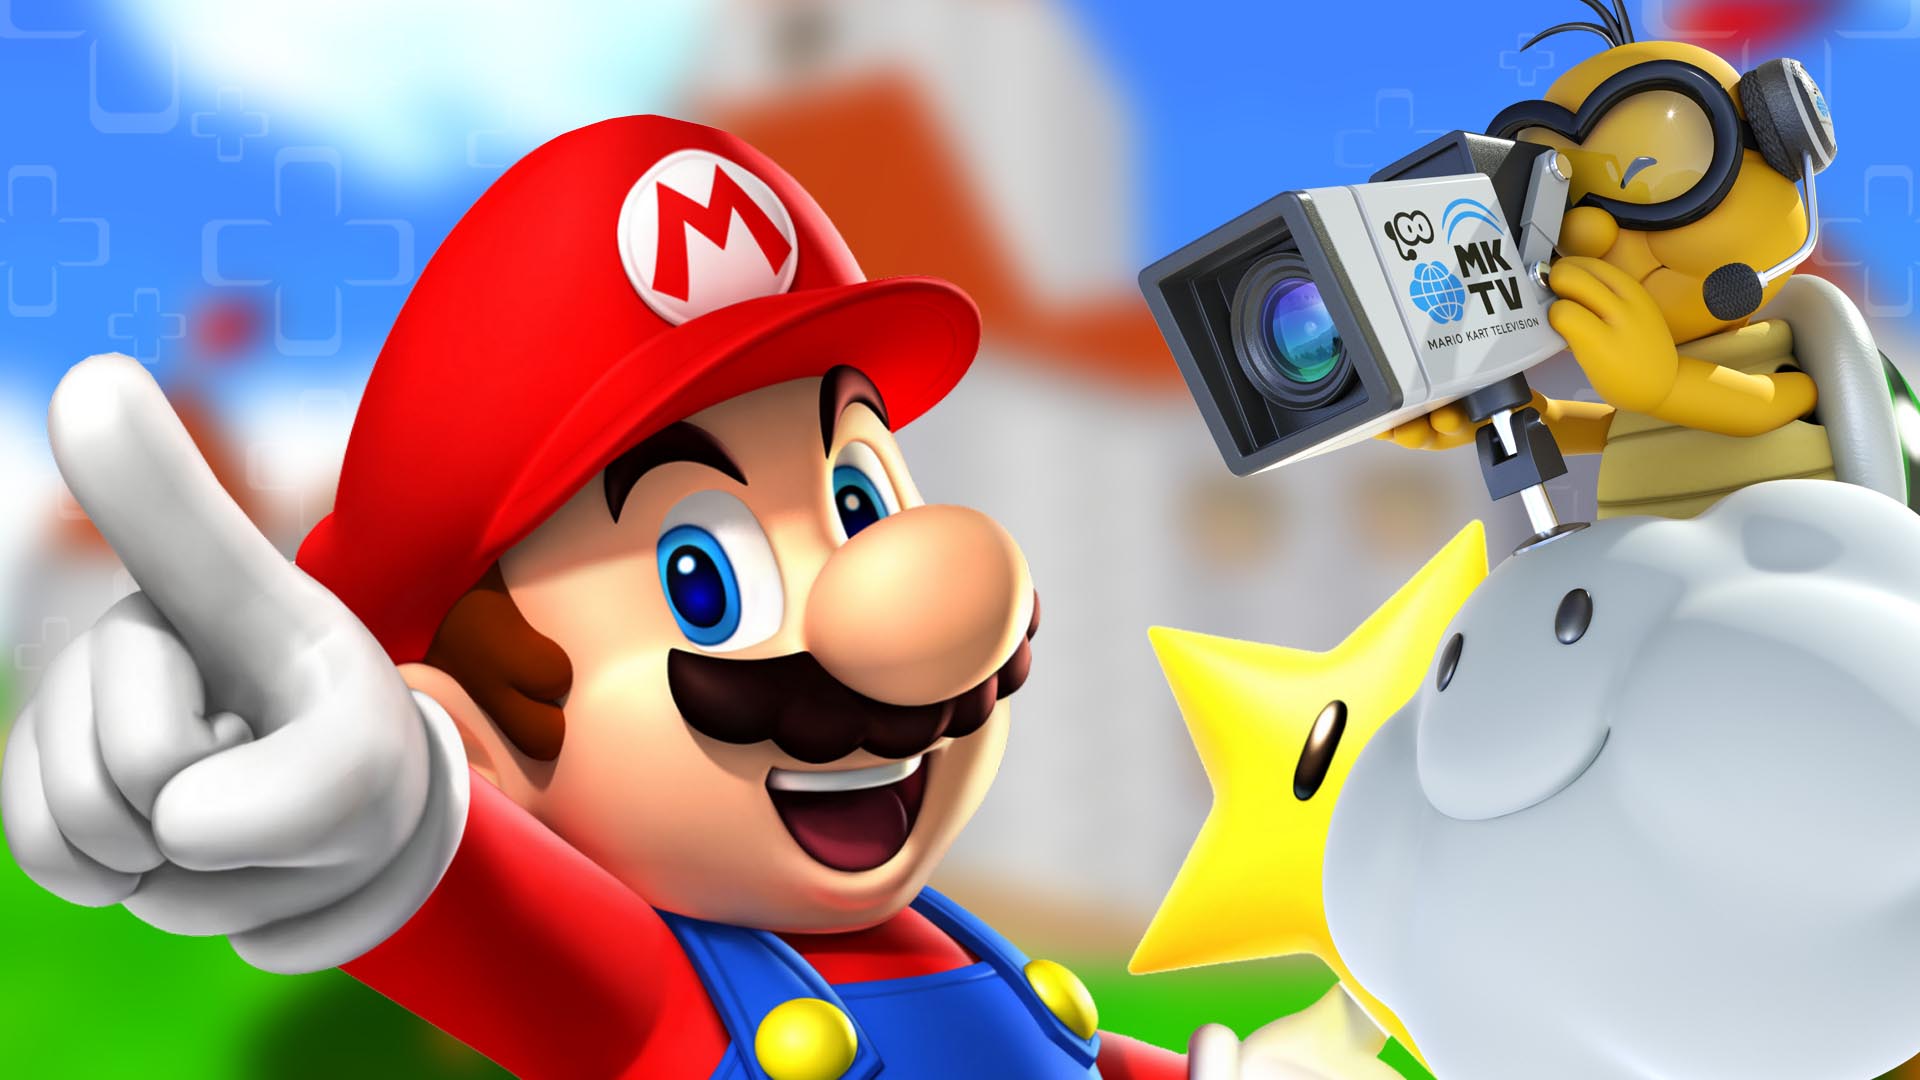 Nintendo Wire mia! The Super Mario Bros. movie has been officially delayed to Spring 2023